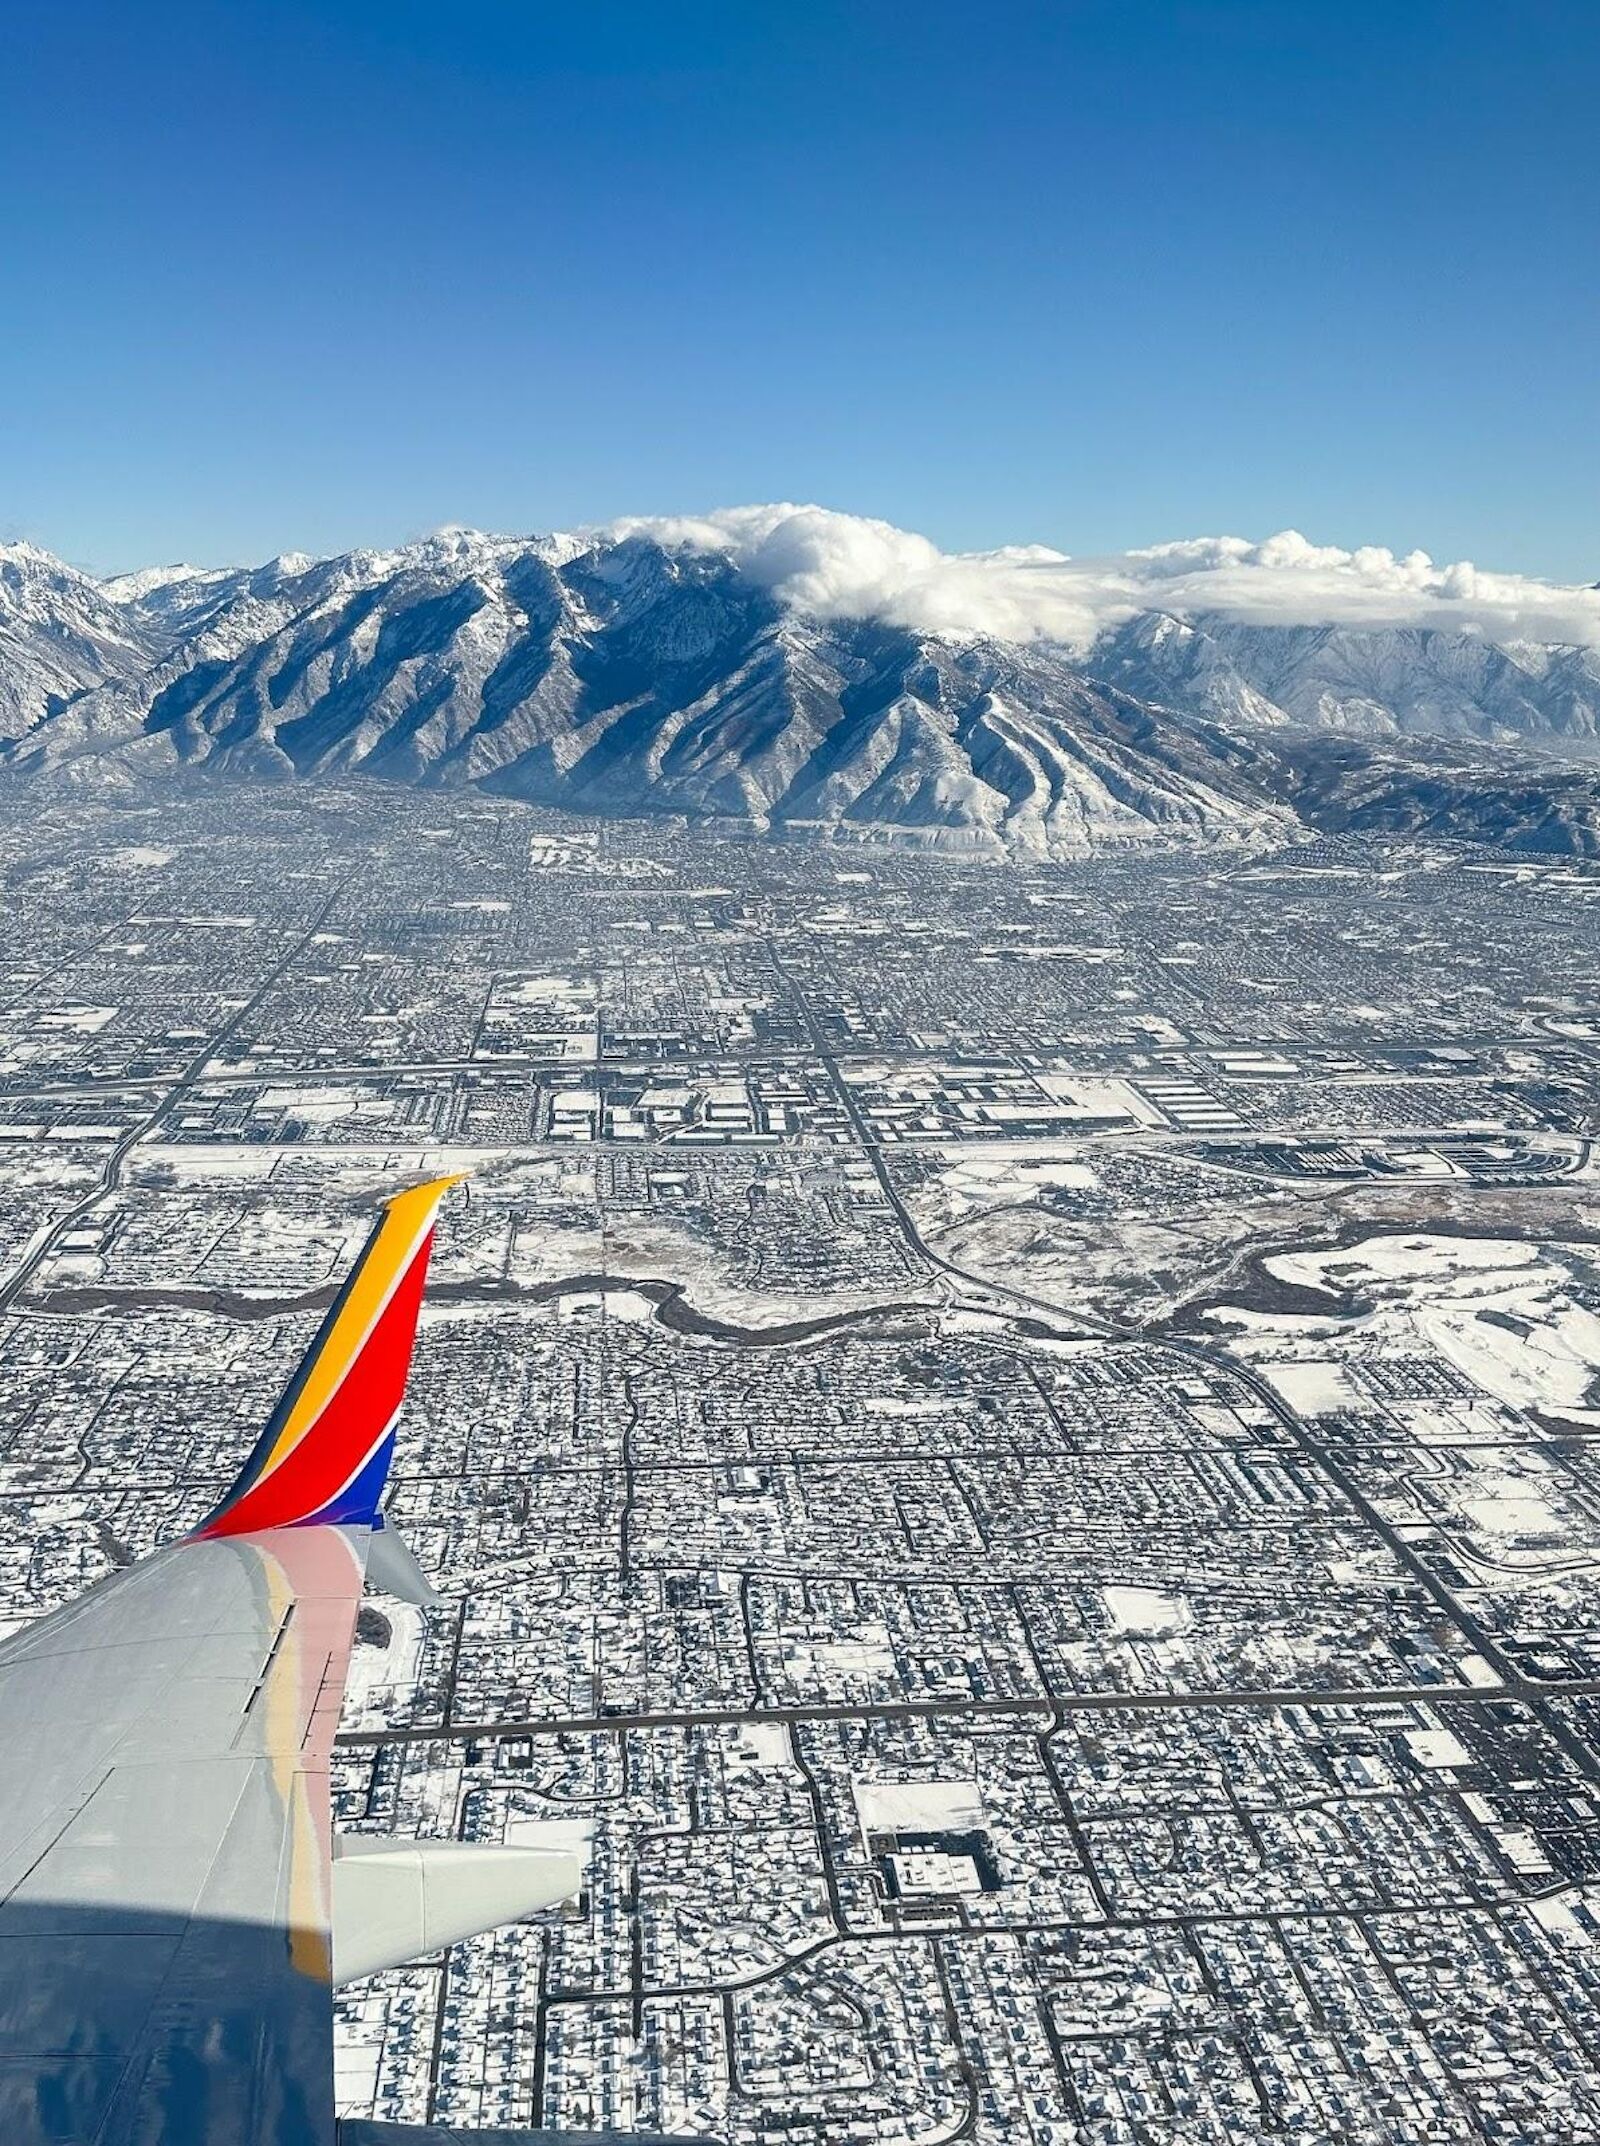 Flying into Park City, Utah